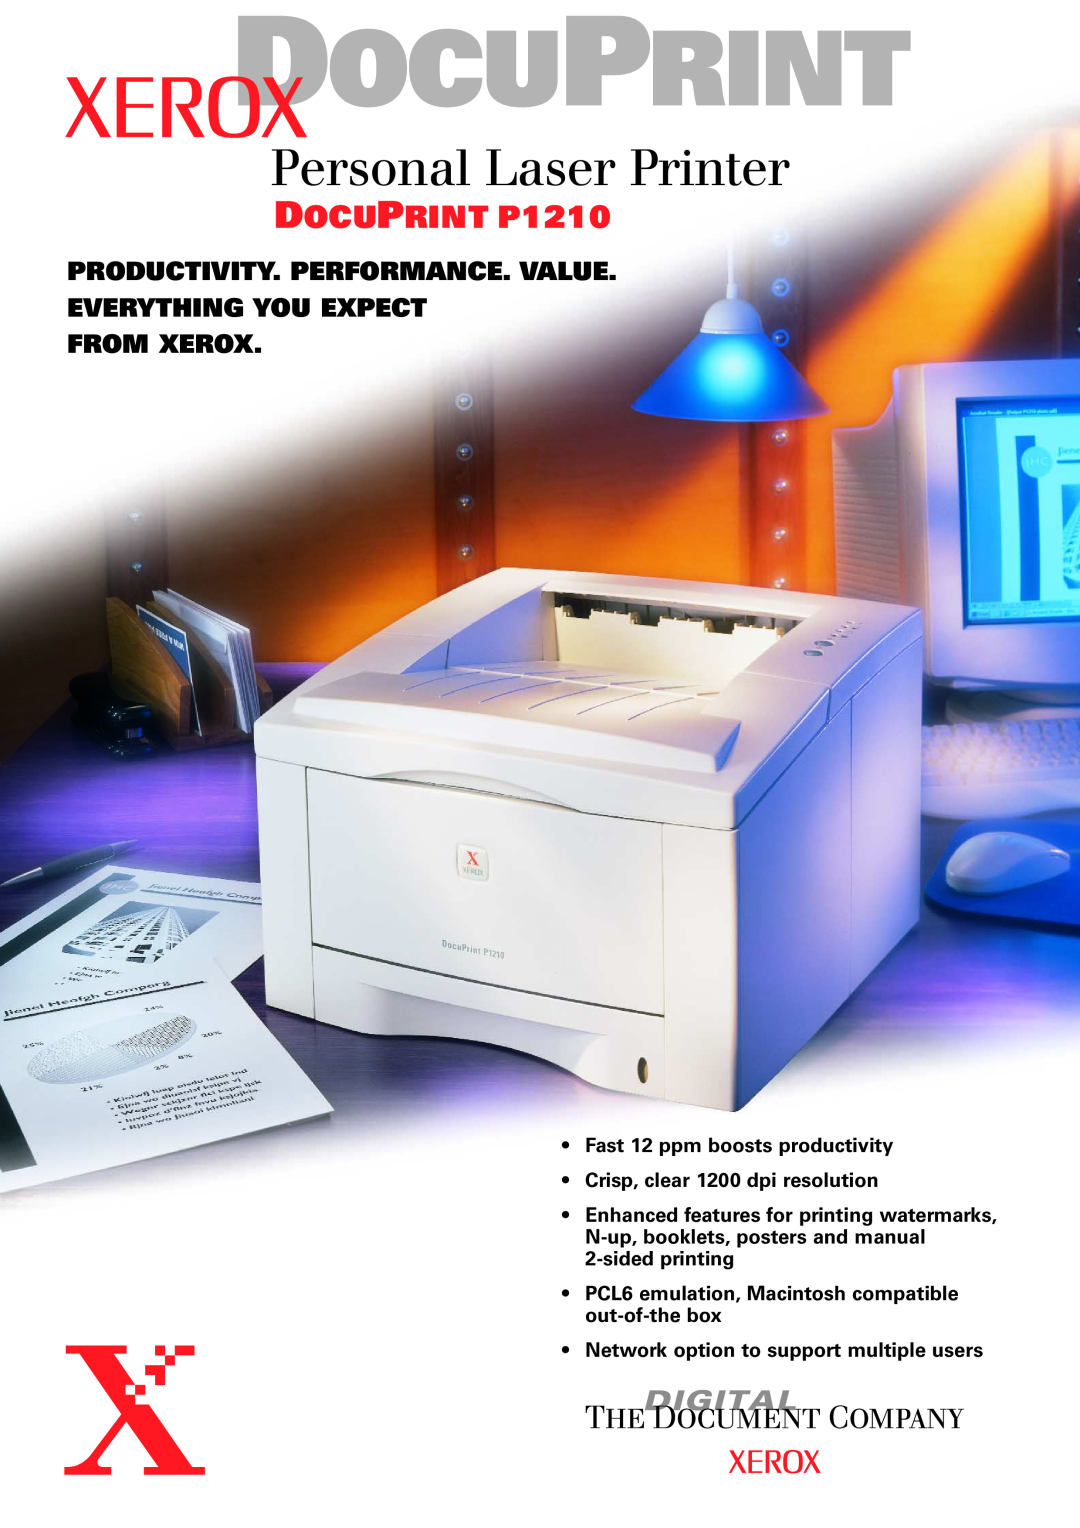 Xerox manual Docuprint, Personal Laser Printer, DOCUPRINT P1210, Productivity. Performance. Value 